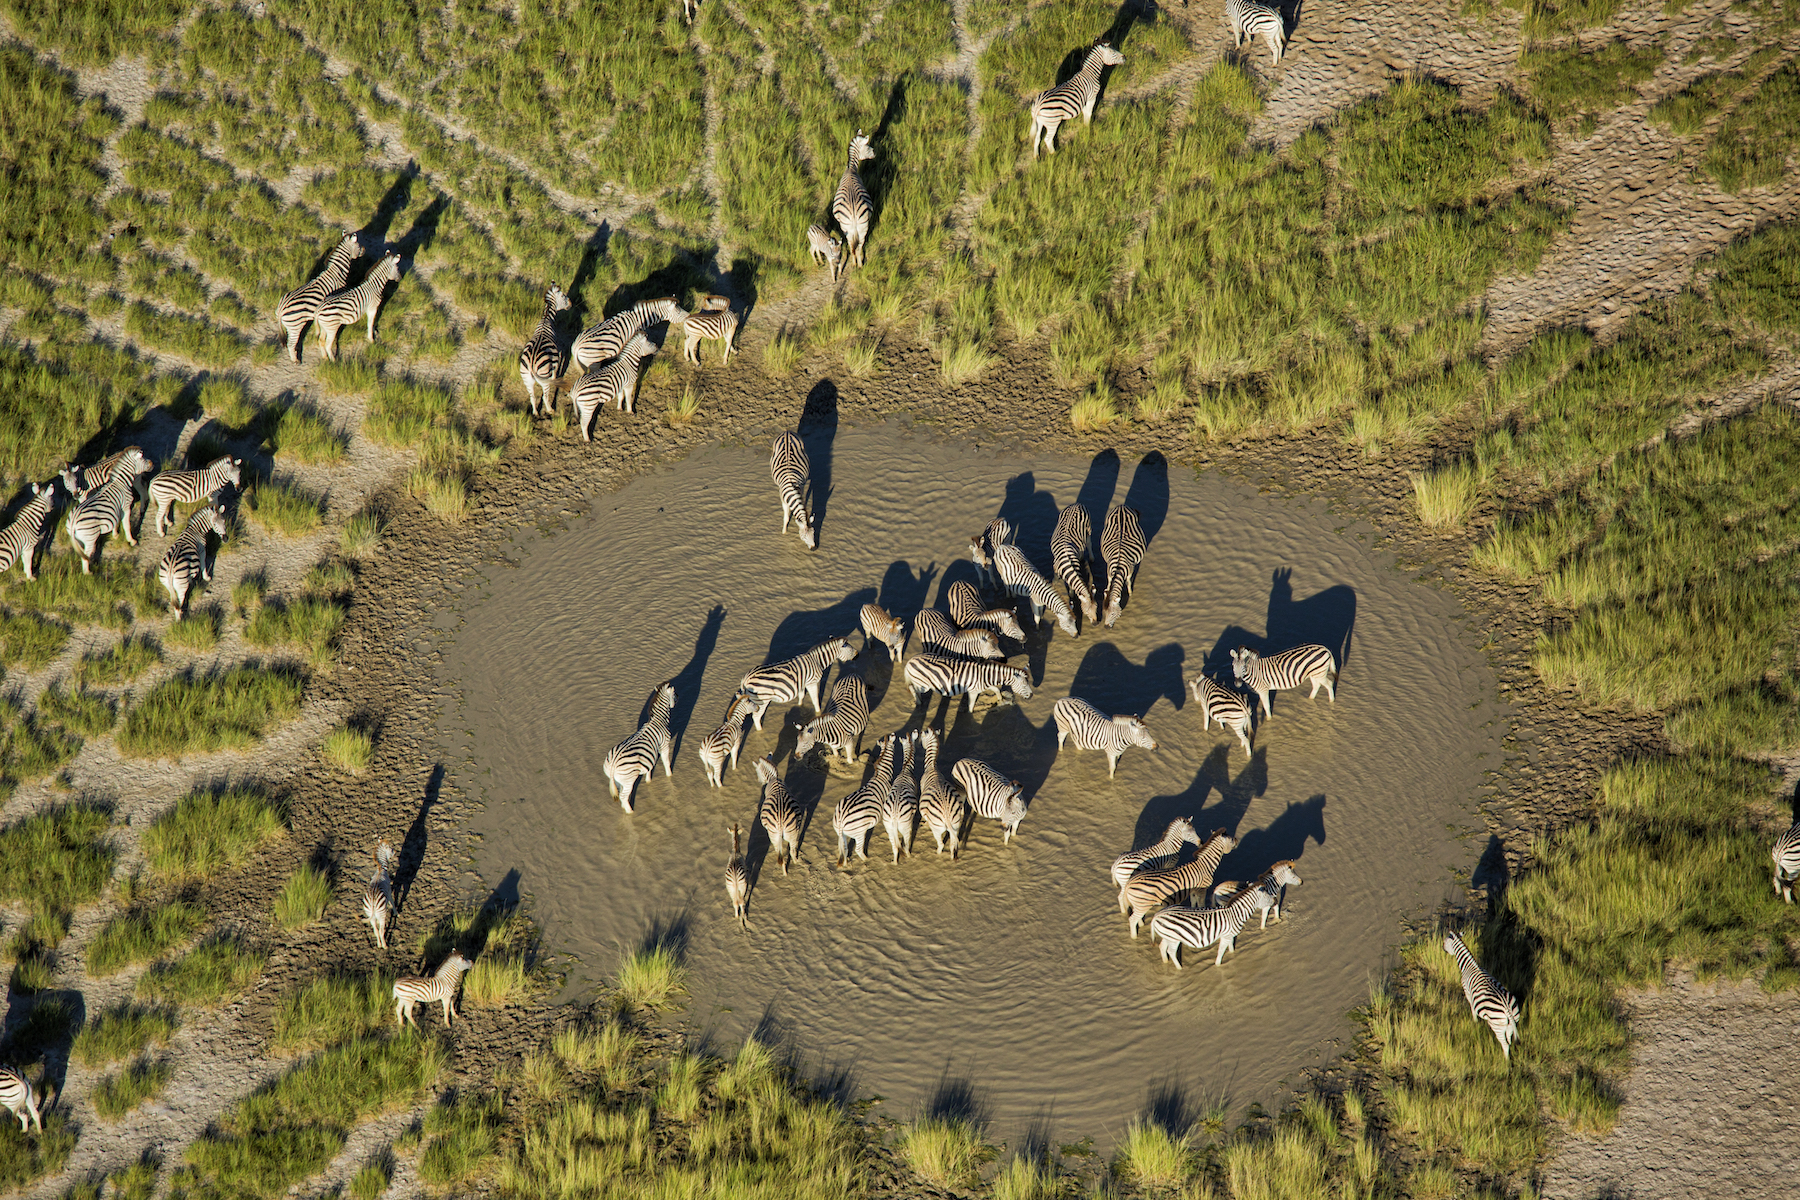 The Botswana zebra migration